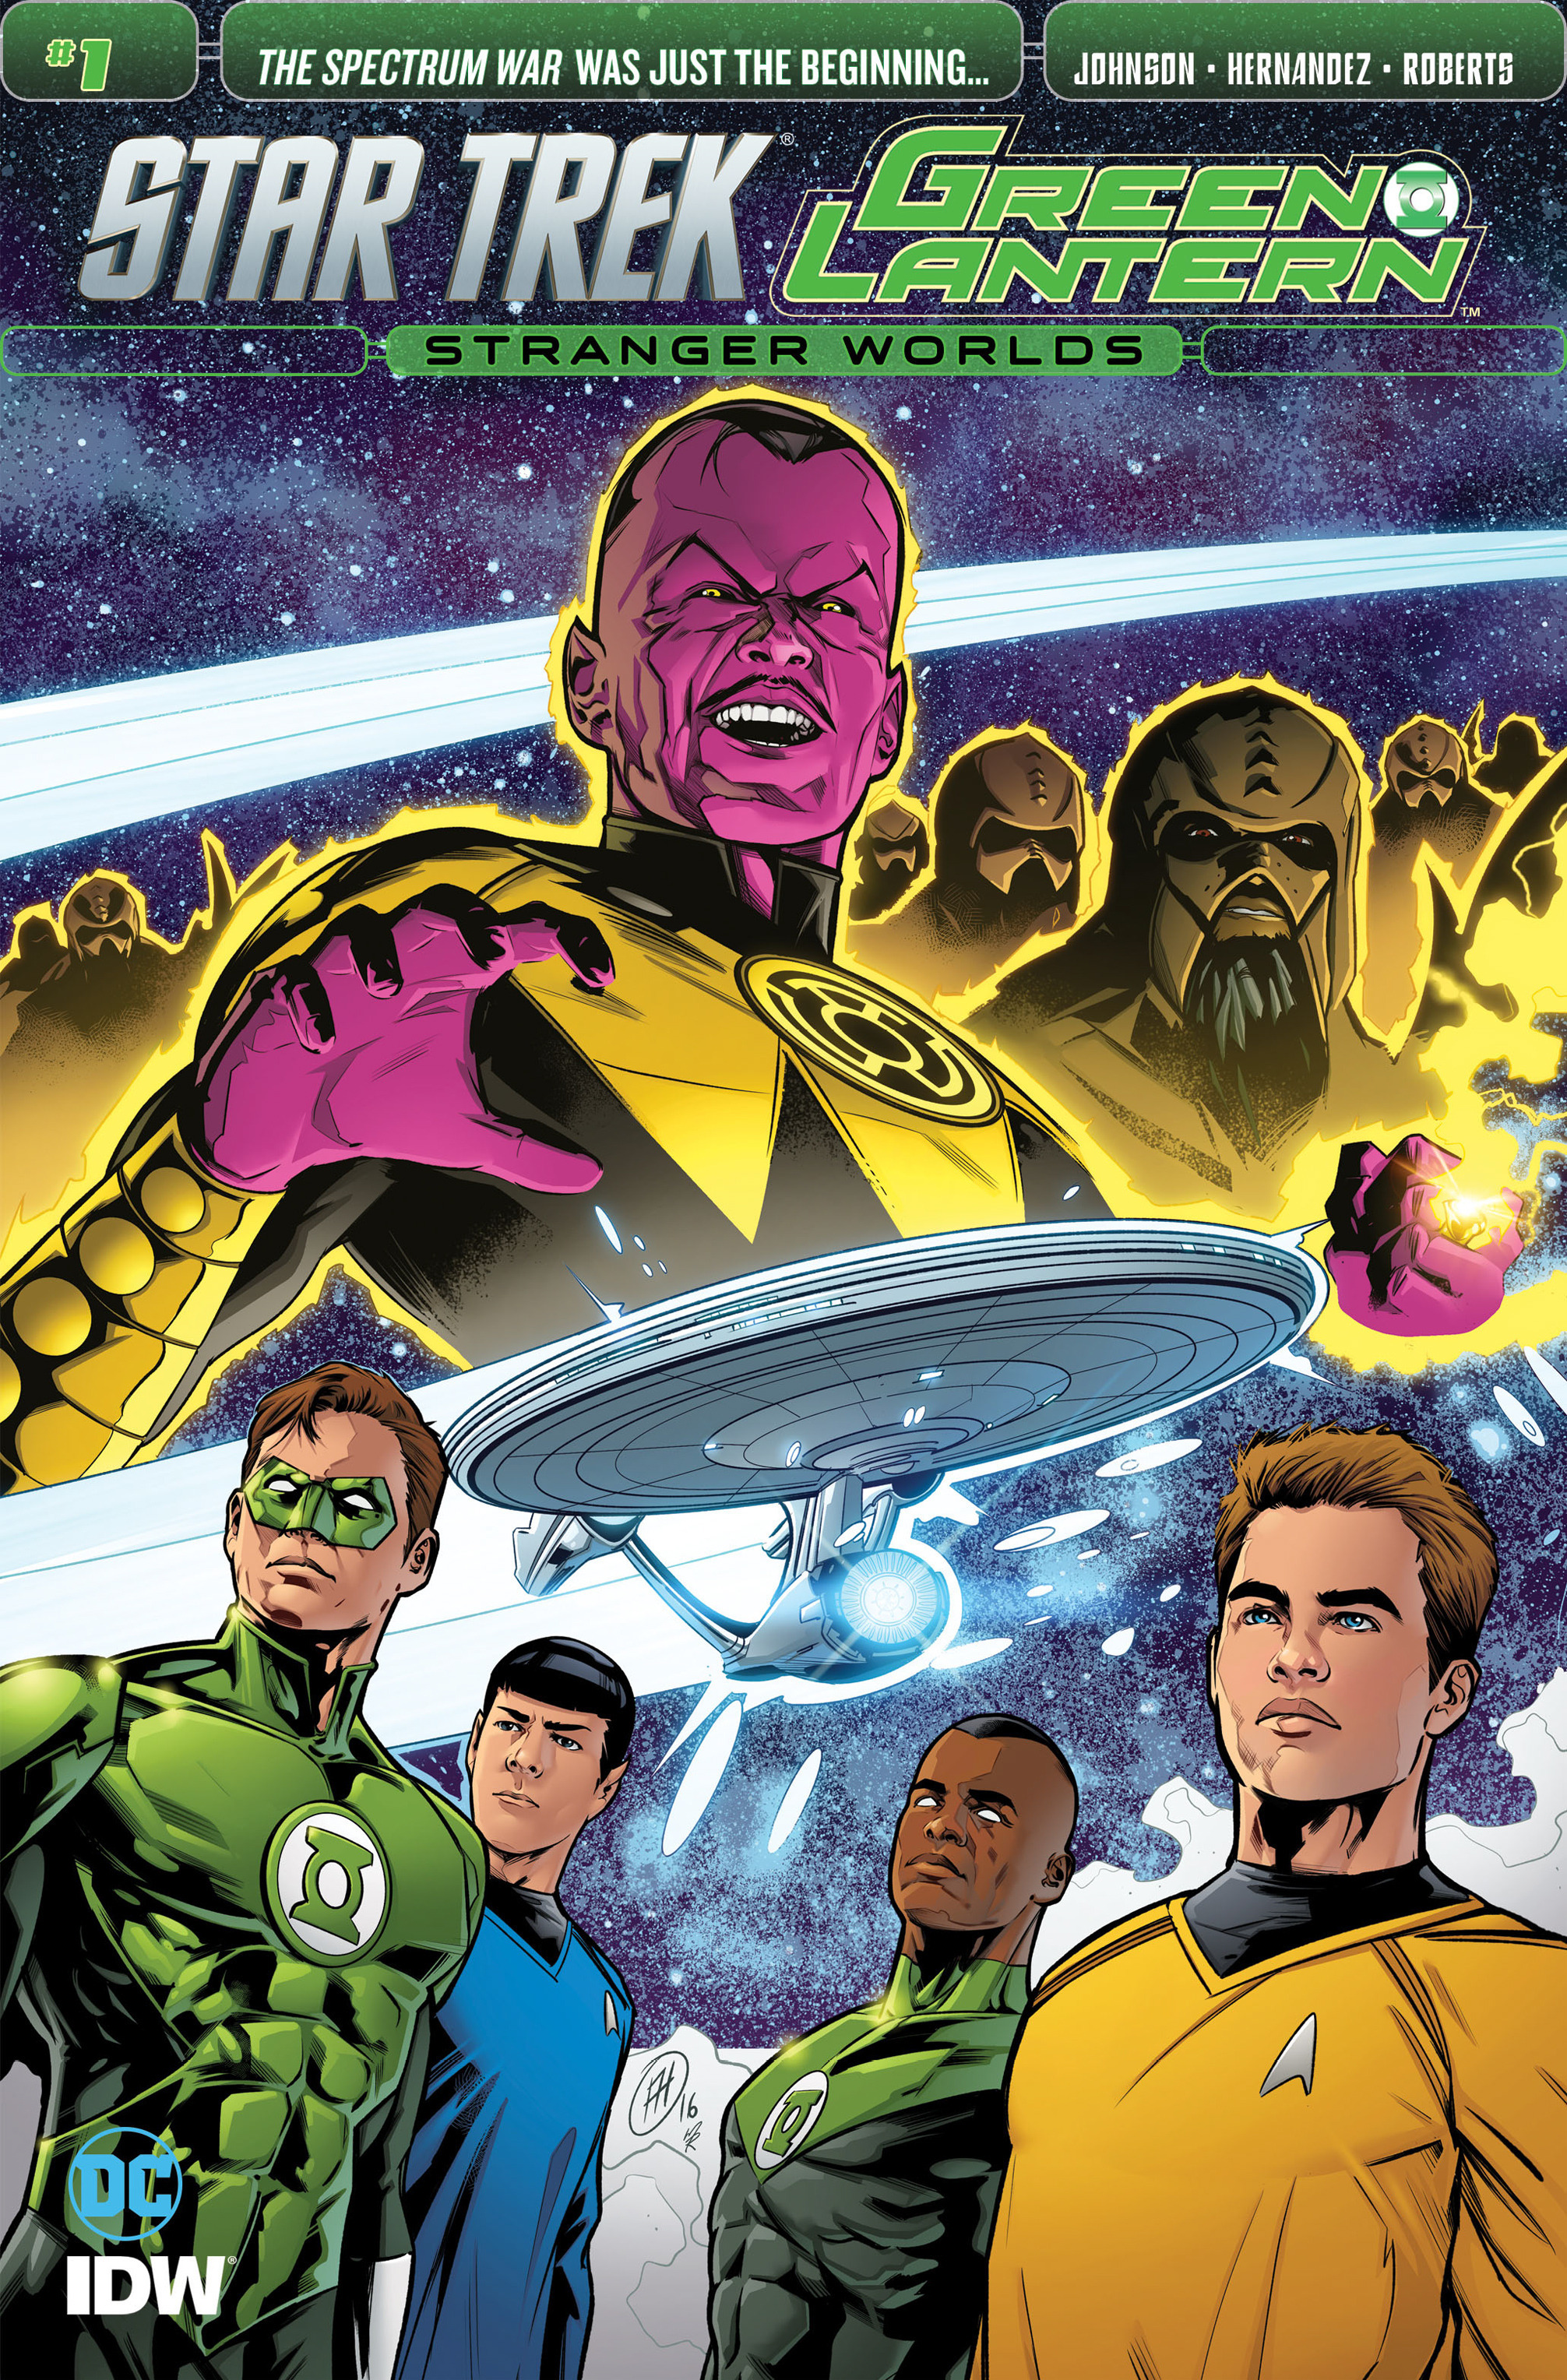 Star Trek - Green Lantern Vol. 2 (2016-): Chapter 1 - Page 1